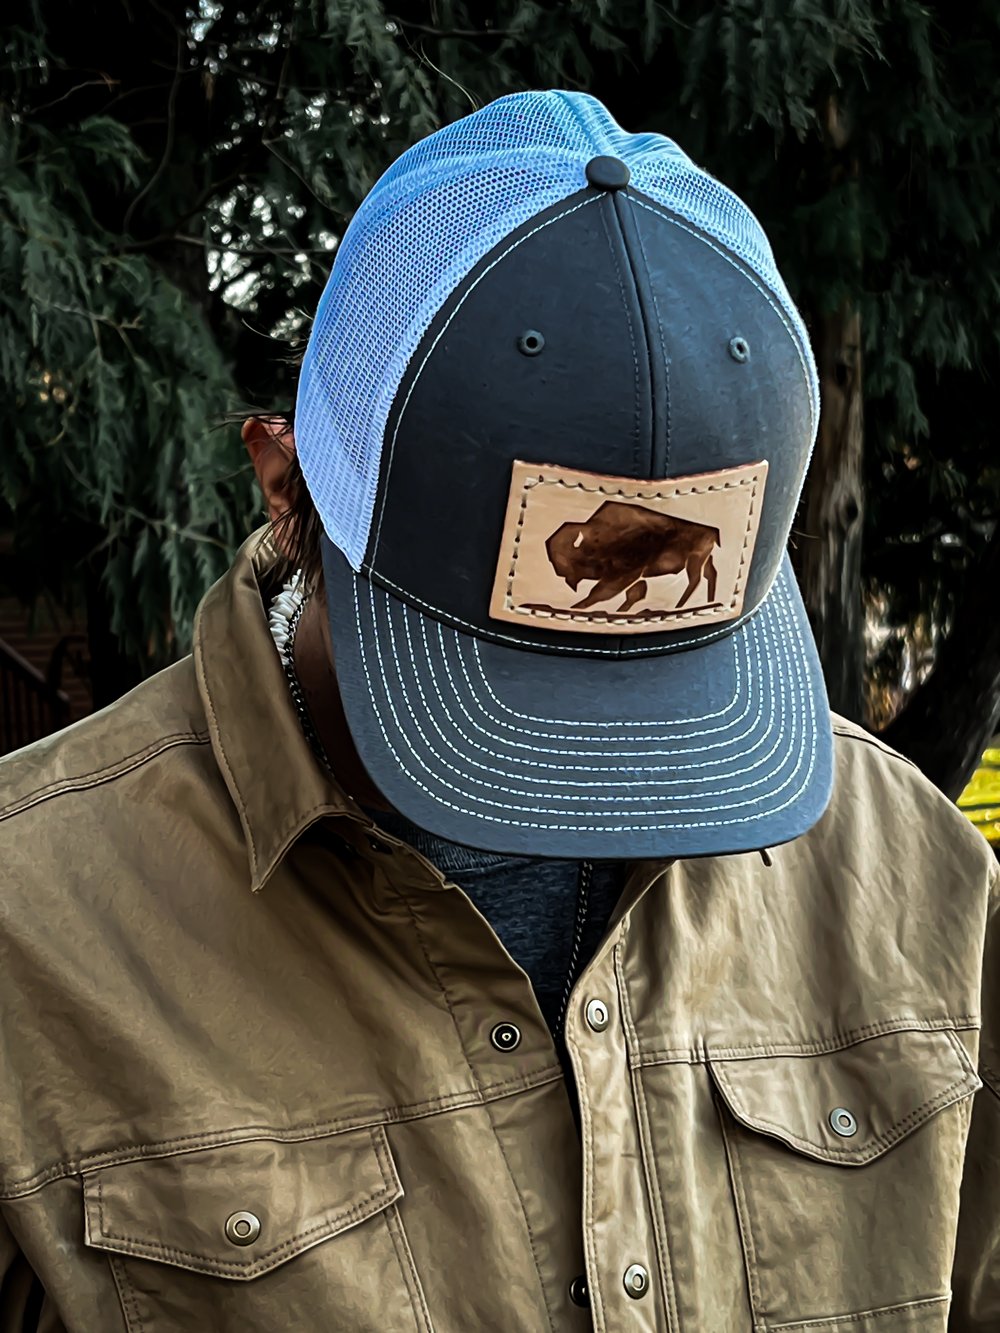 snapback buffalo bills hat